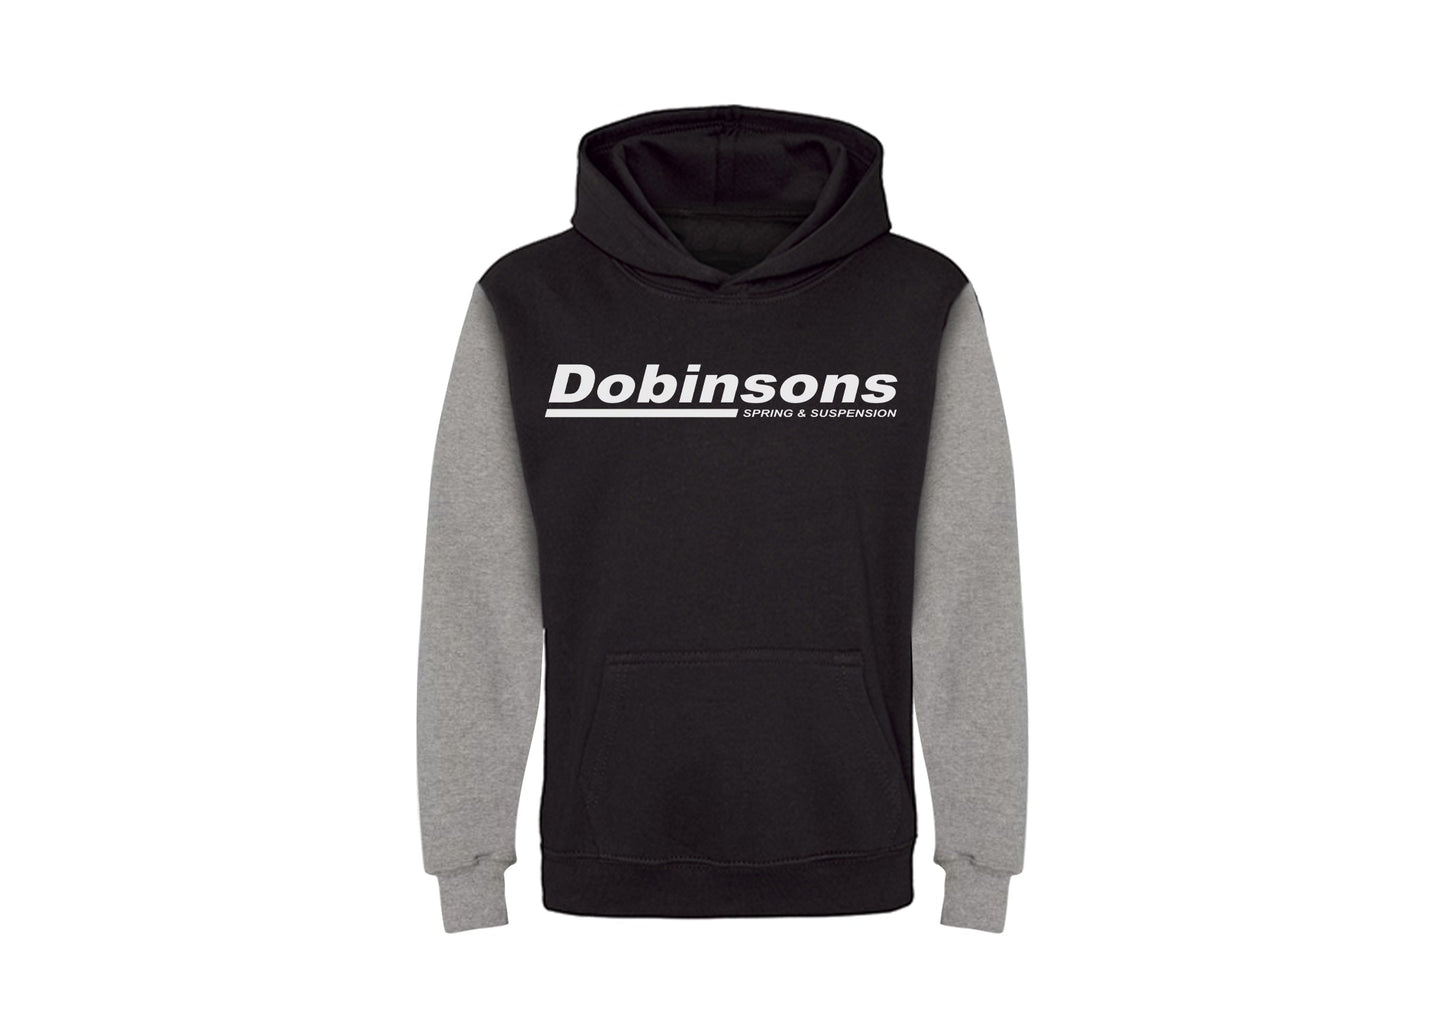 Dobinsons Black and Grey Logo Sweater  (PG00-2270)